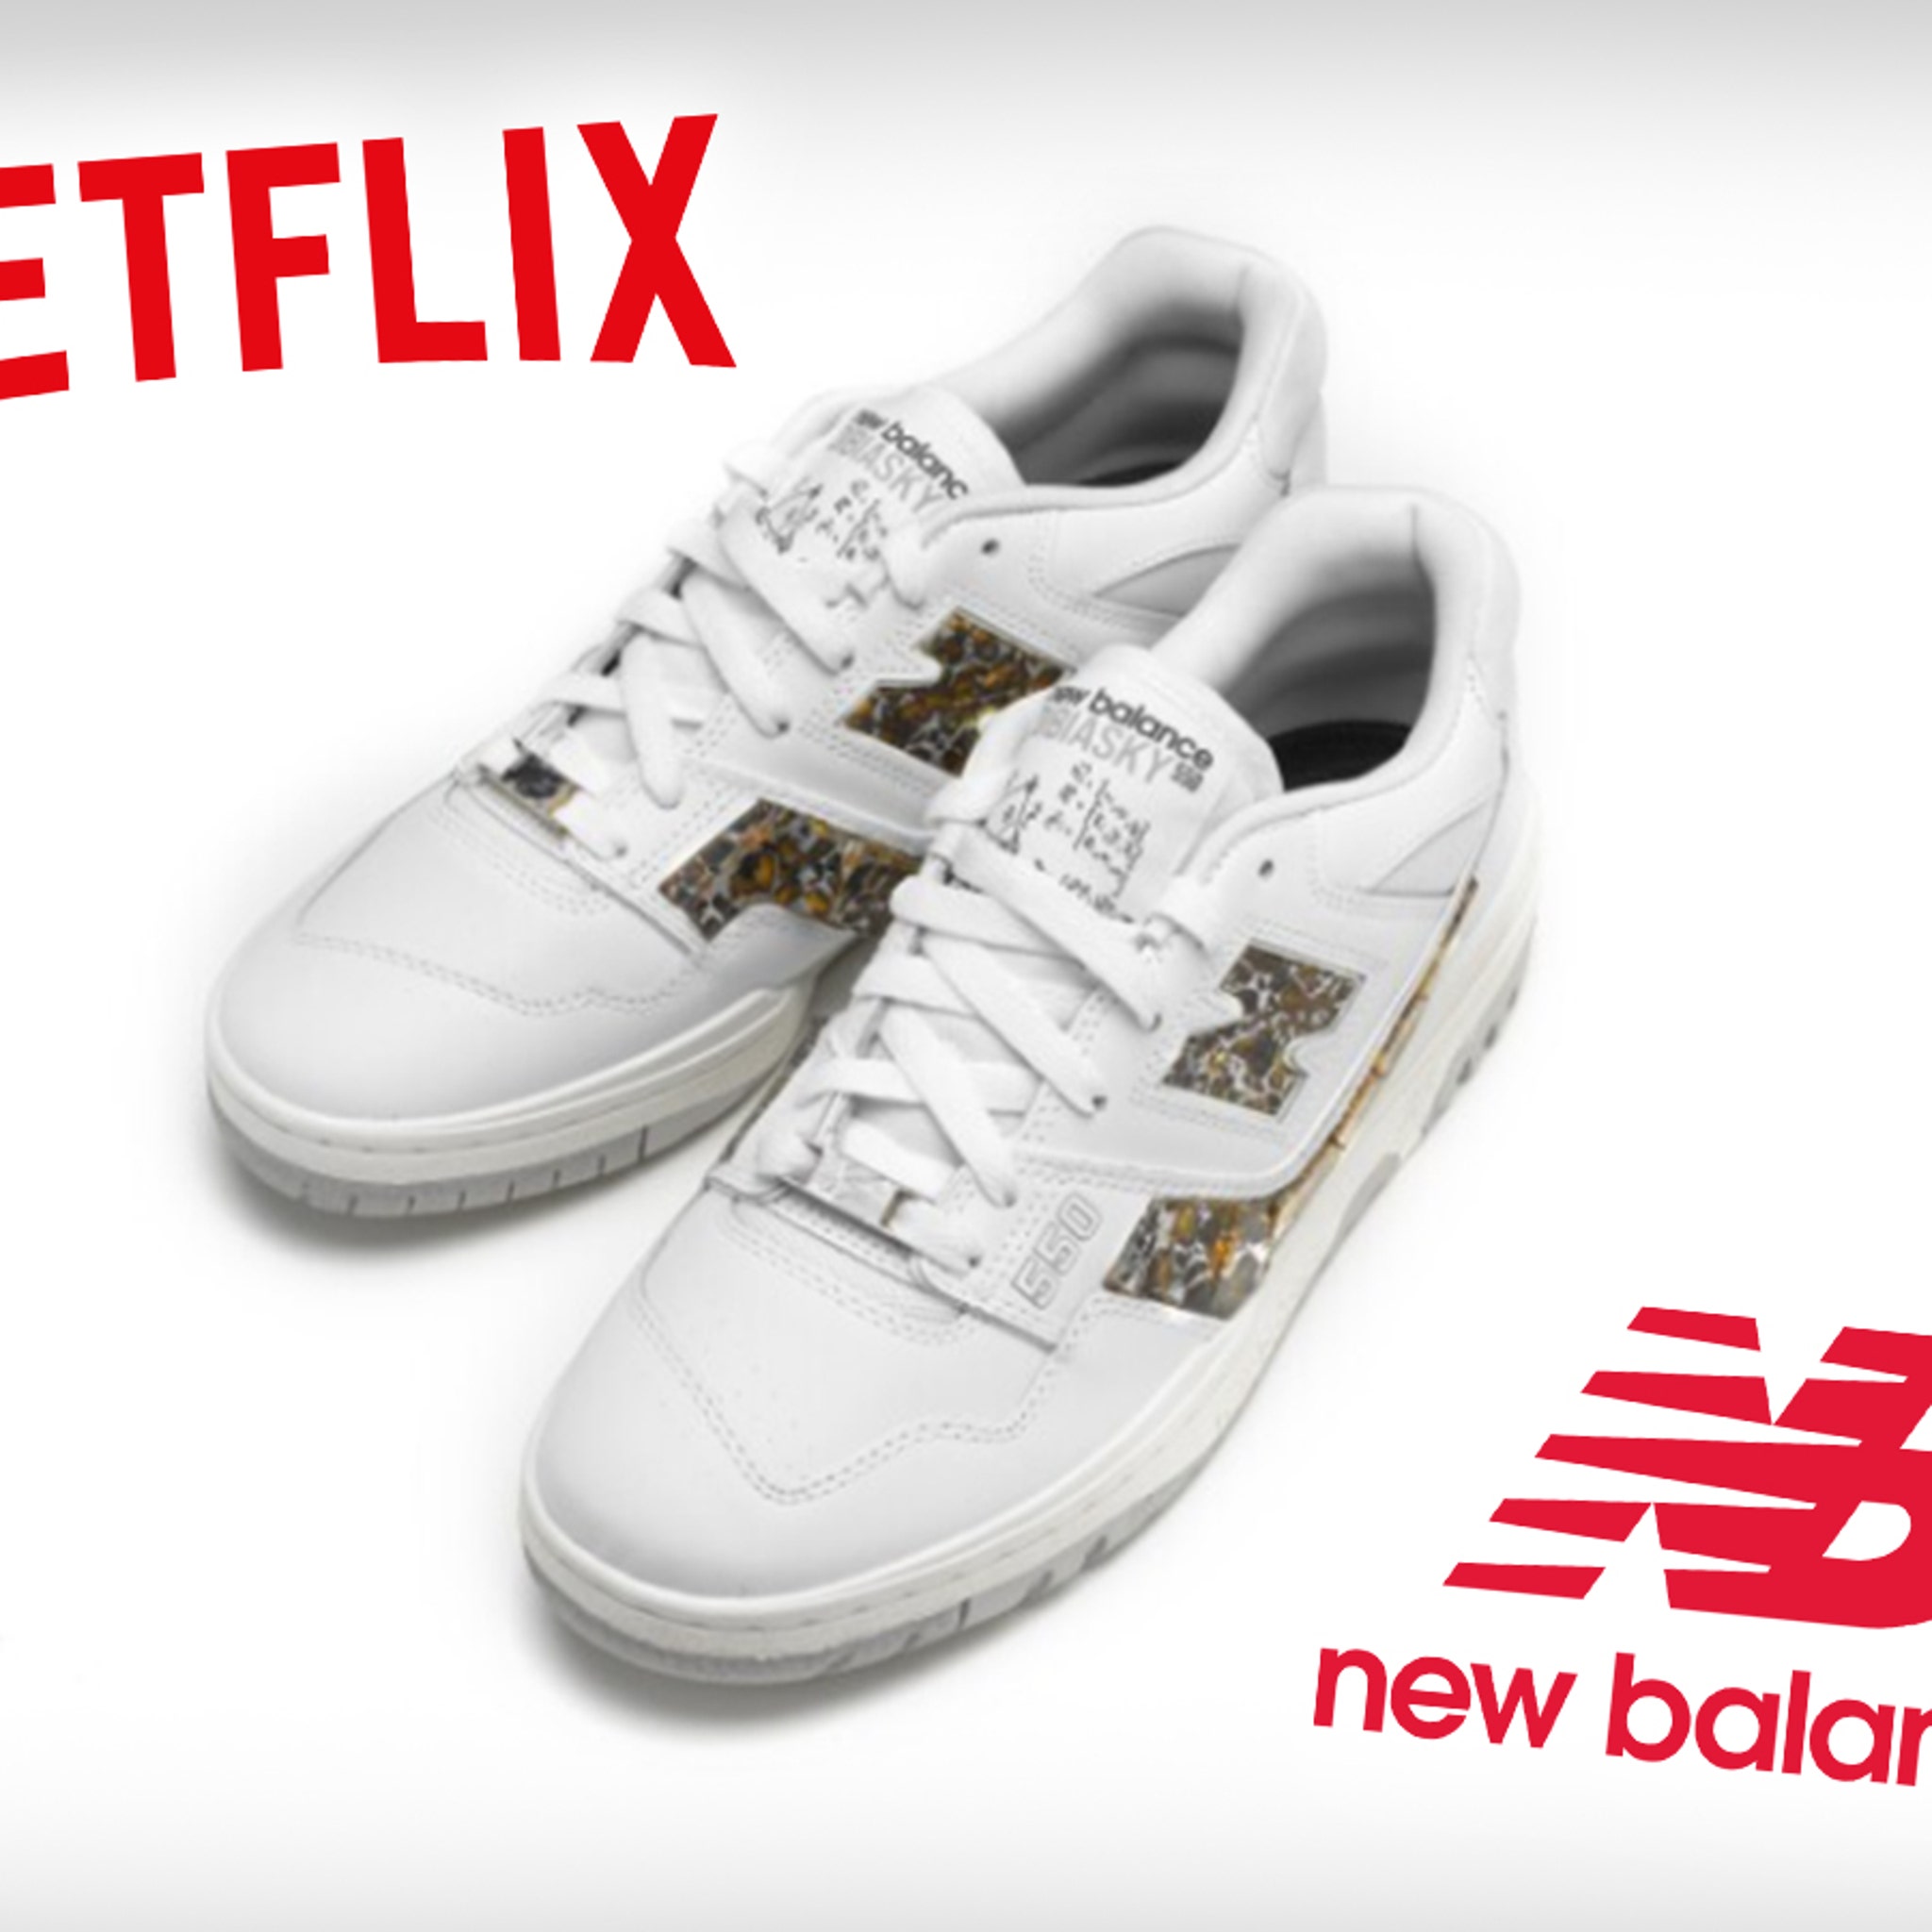 Netflix Launches Meteorite-Clad New Balance 550s